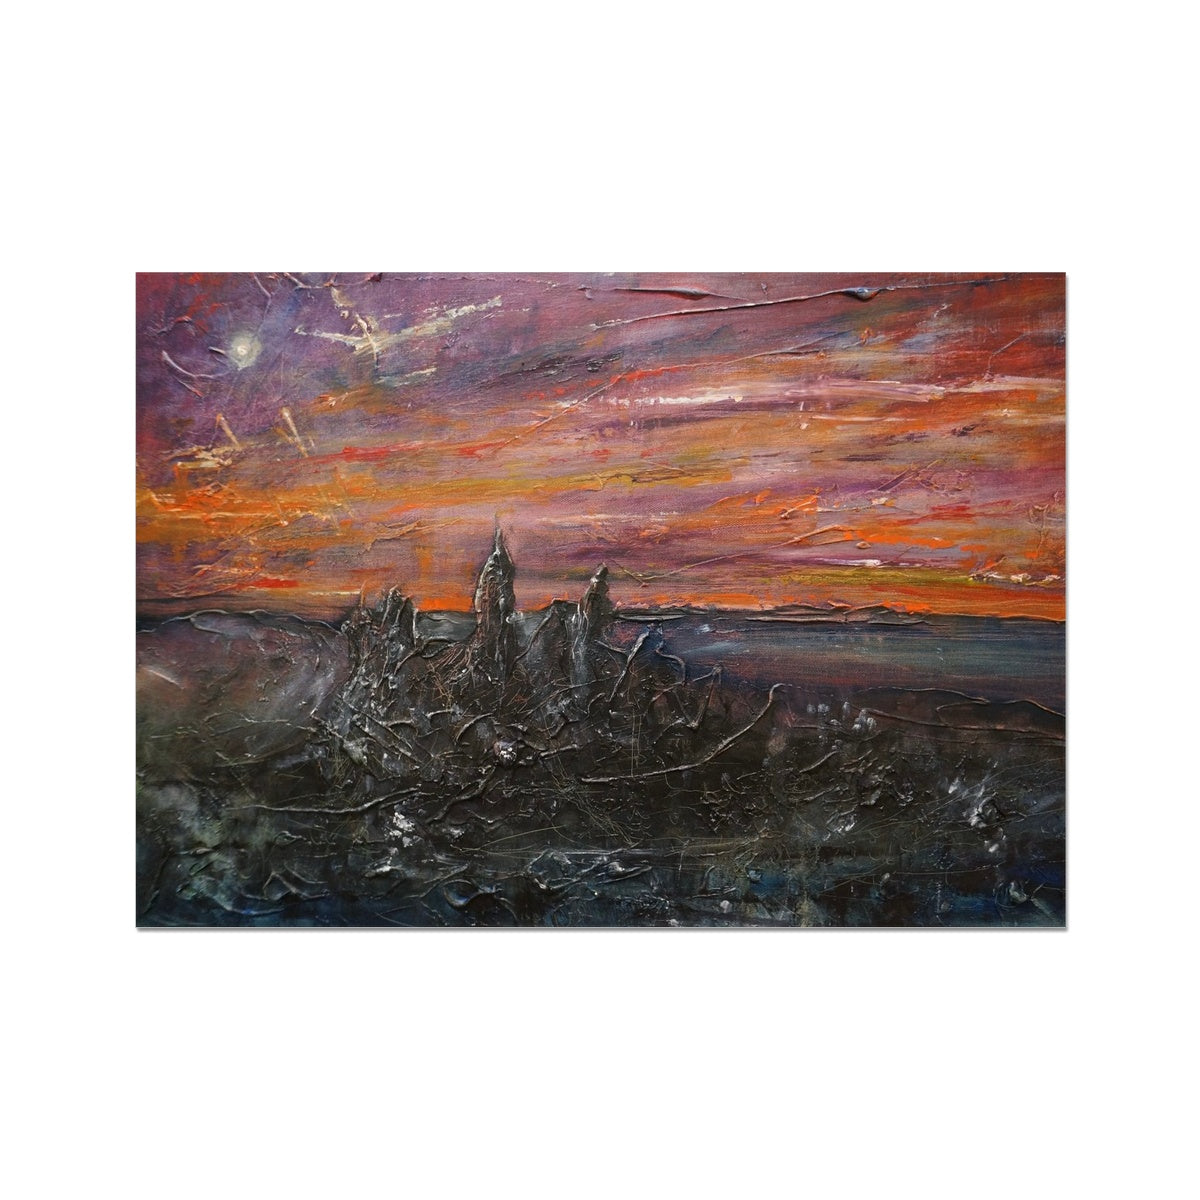 Storr Moonlight Skye Painting | Fine Art Prints From Scotland-Unframed Prints-Skye Art Gallery-A2 Landscape-Paintings, Prints, Homeware, Art Gifts From Scotland By Scottish Artist Kevin Hunter